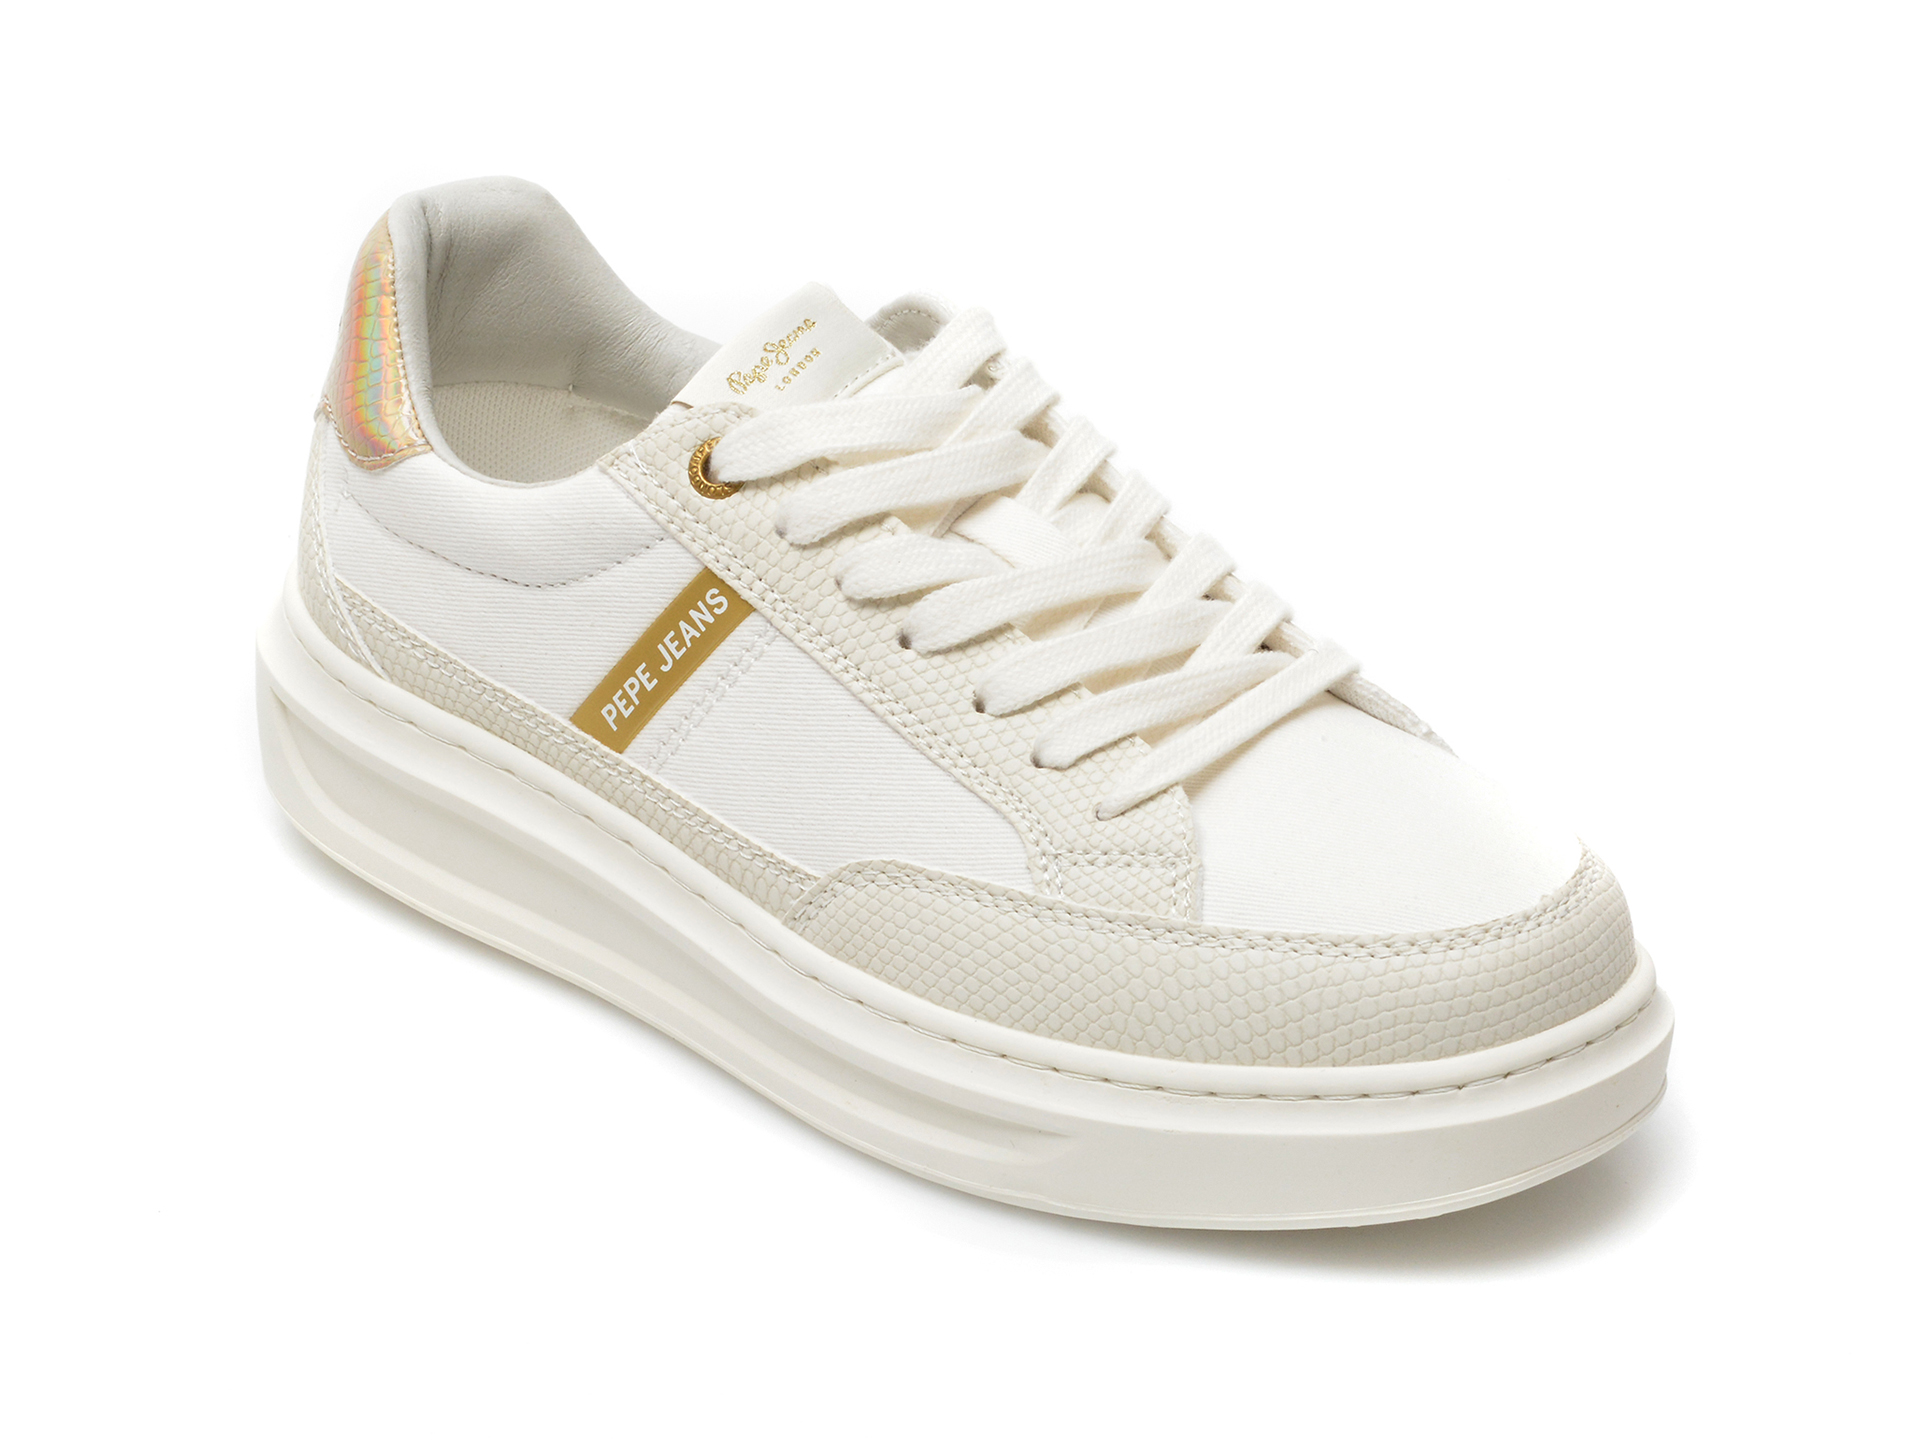 Pantofi sport PEPE JEANS albi, 3115299, din material textil si piele ecologica